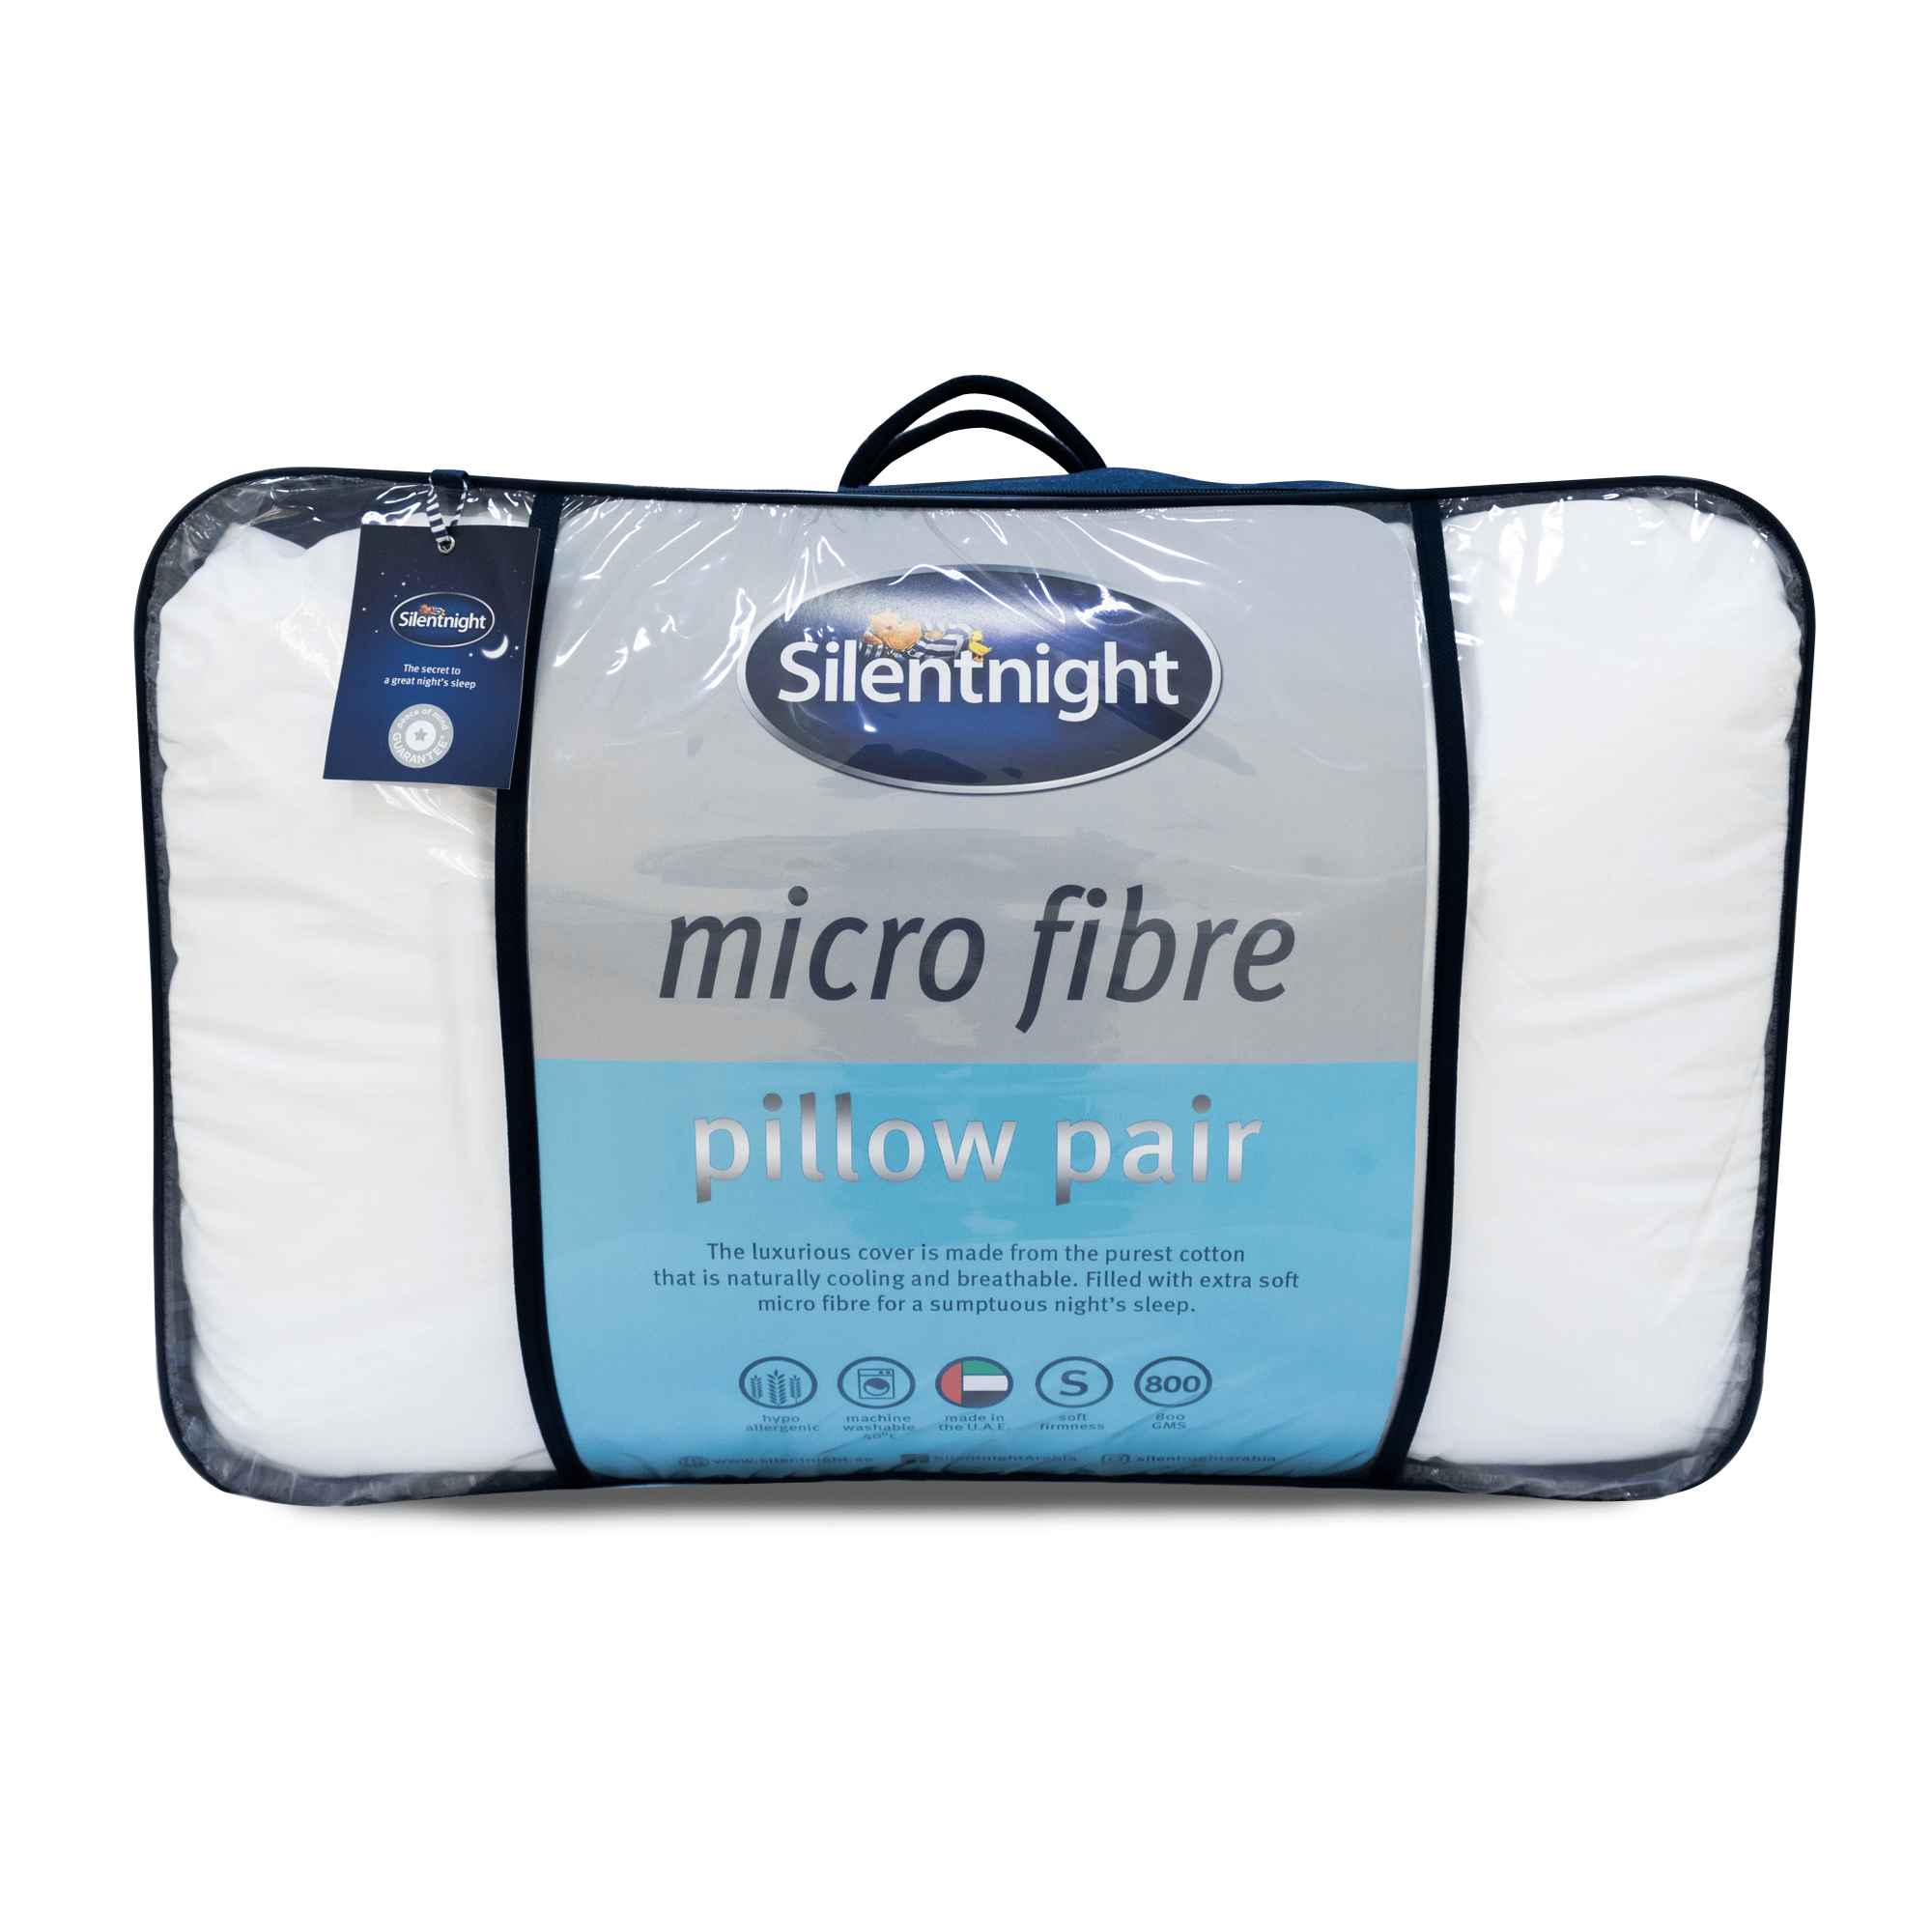 Micro Fibre Pillow Pair